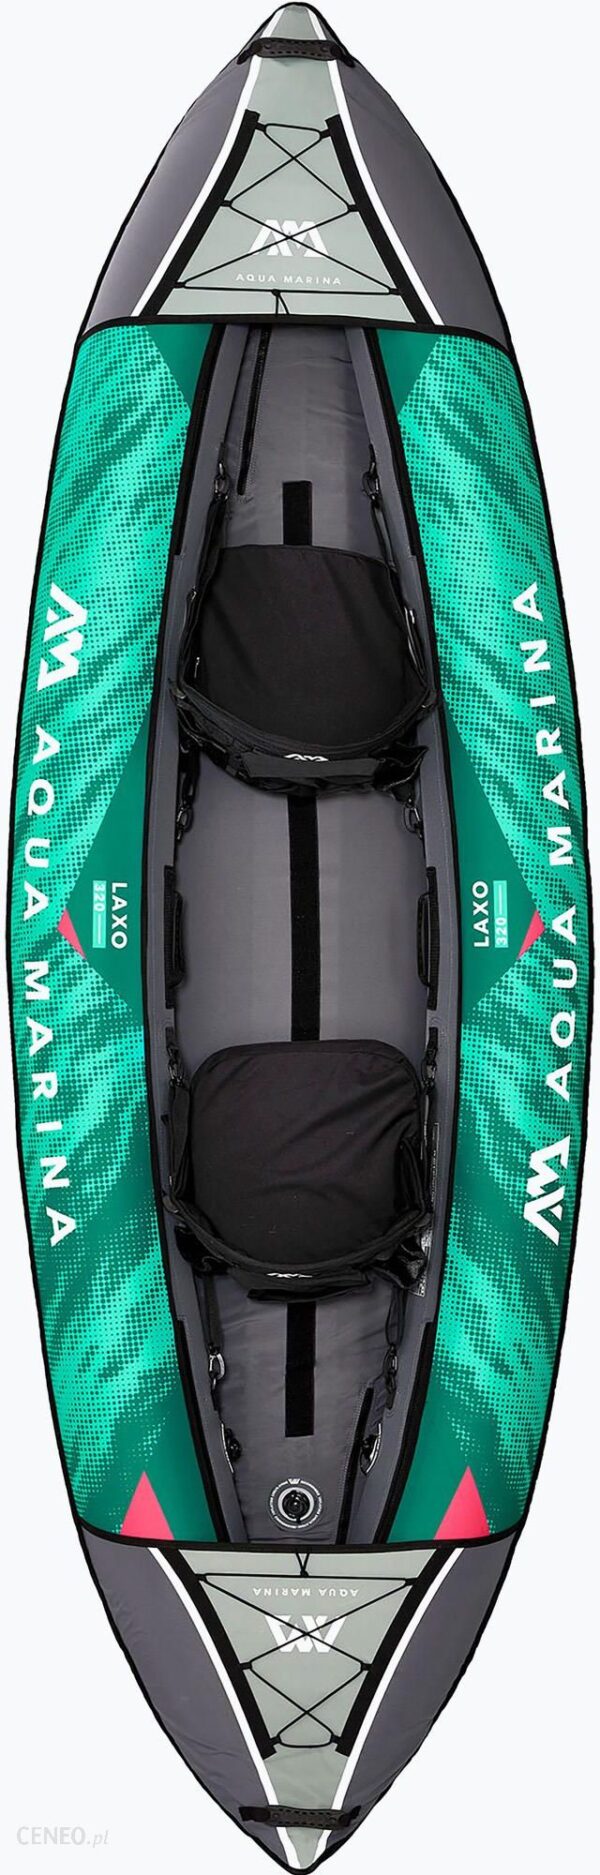 Aqua Marina Laxo 320 Recreational Kayak 2 Person. Inflatable Deck. Paddle Set Included. La320 Zielony